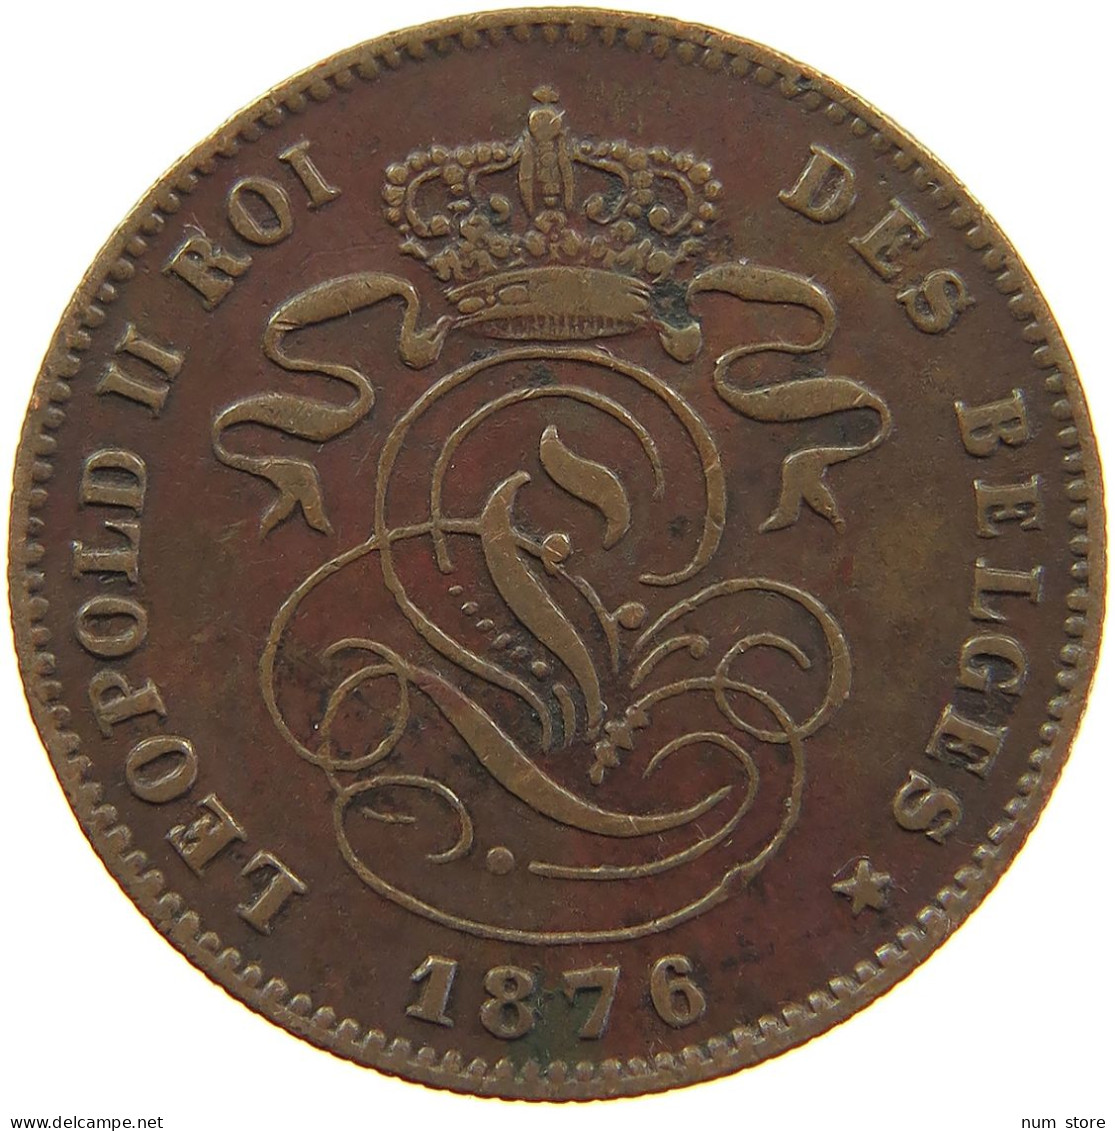 BELGIUM 2 CENTIMES 1876 #s083 0159 - 10 Cents